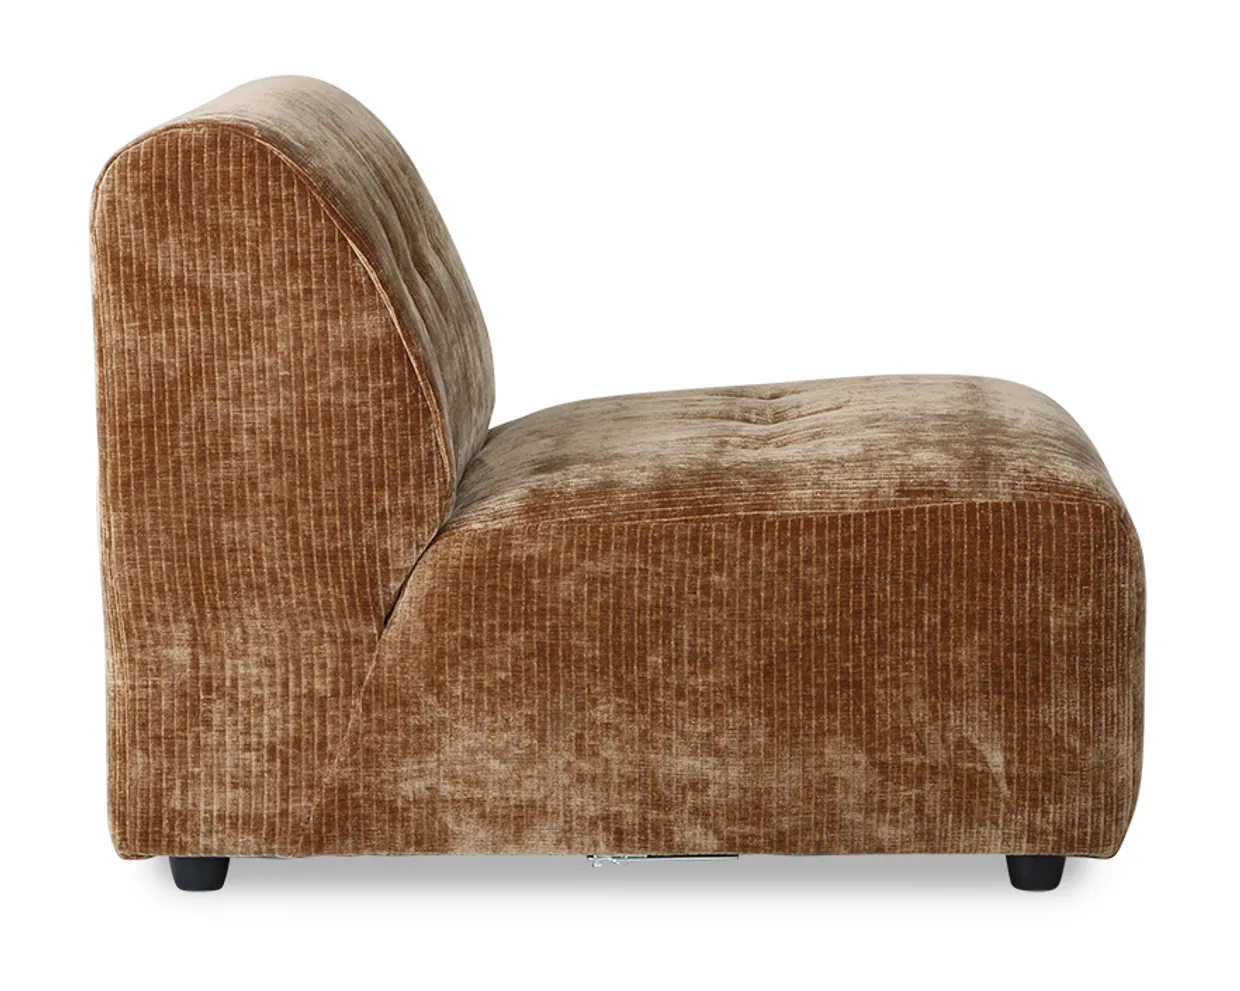 Vint couch: element middle, corduroy velvet, aged gold